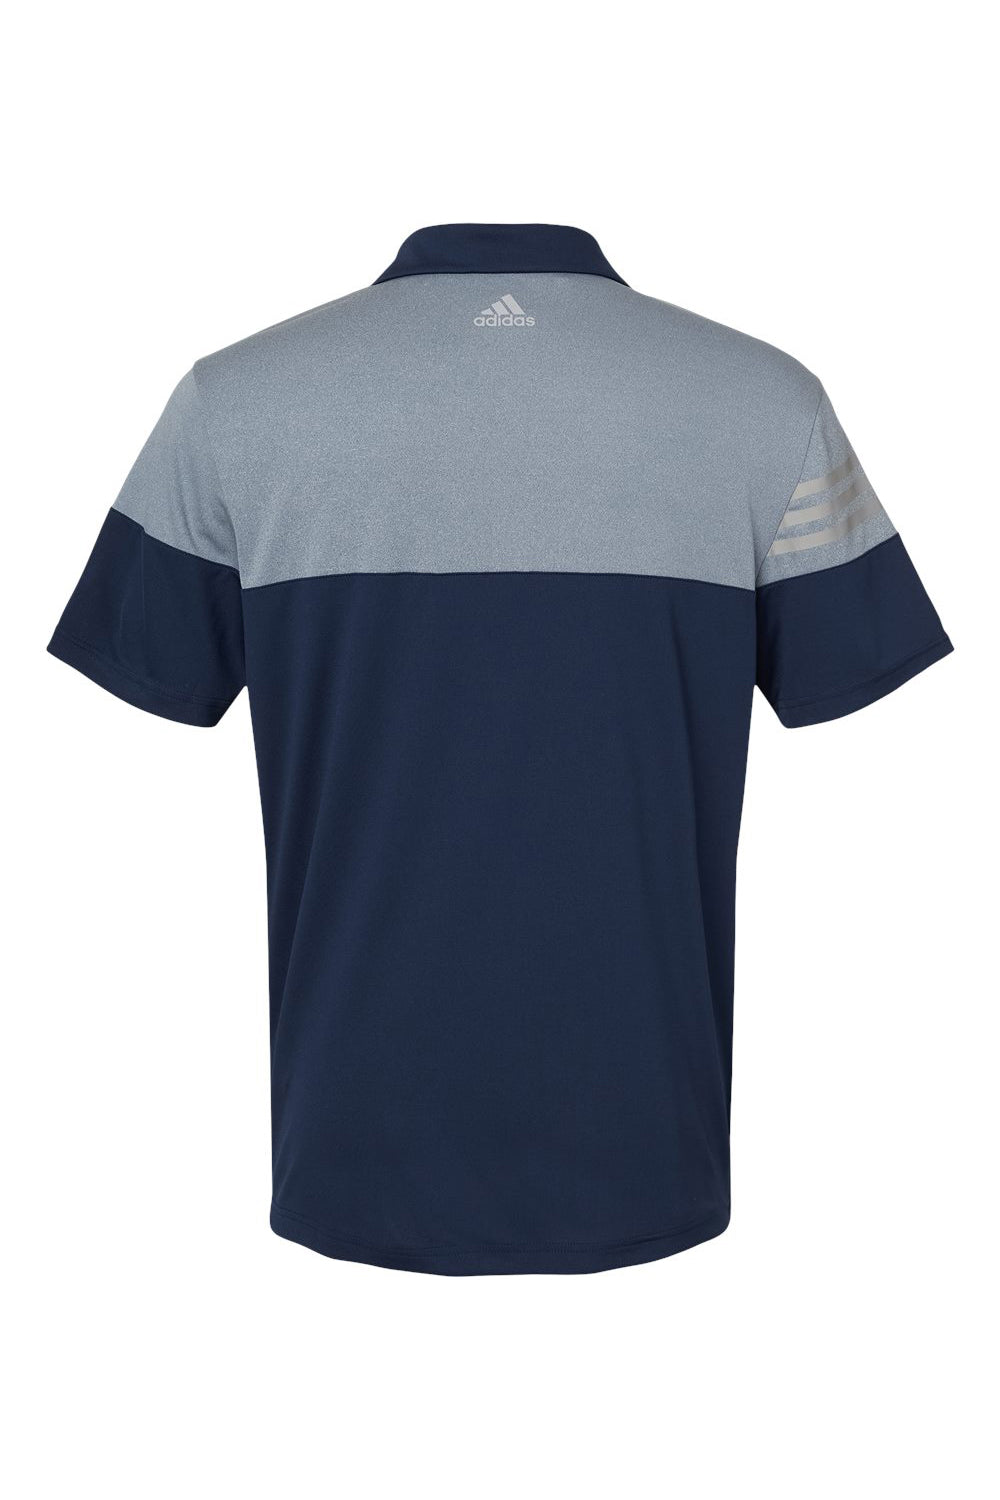 Adidas A213 Mens 3 Stripes Colorblock Moisture Wicking Short Sleeve Polo Shirt Collegiate Navy Blue/Mid Grey Flat Back